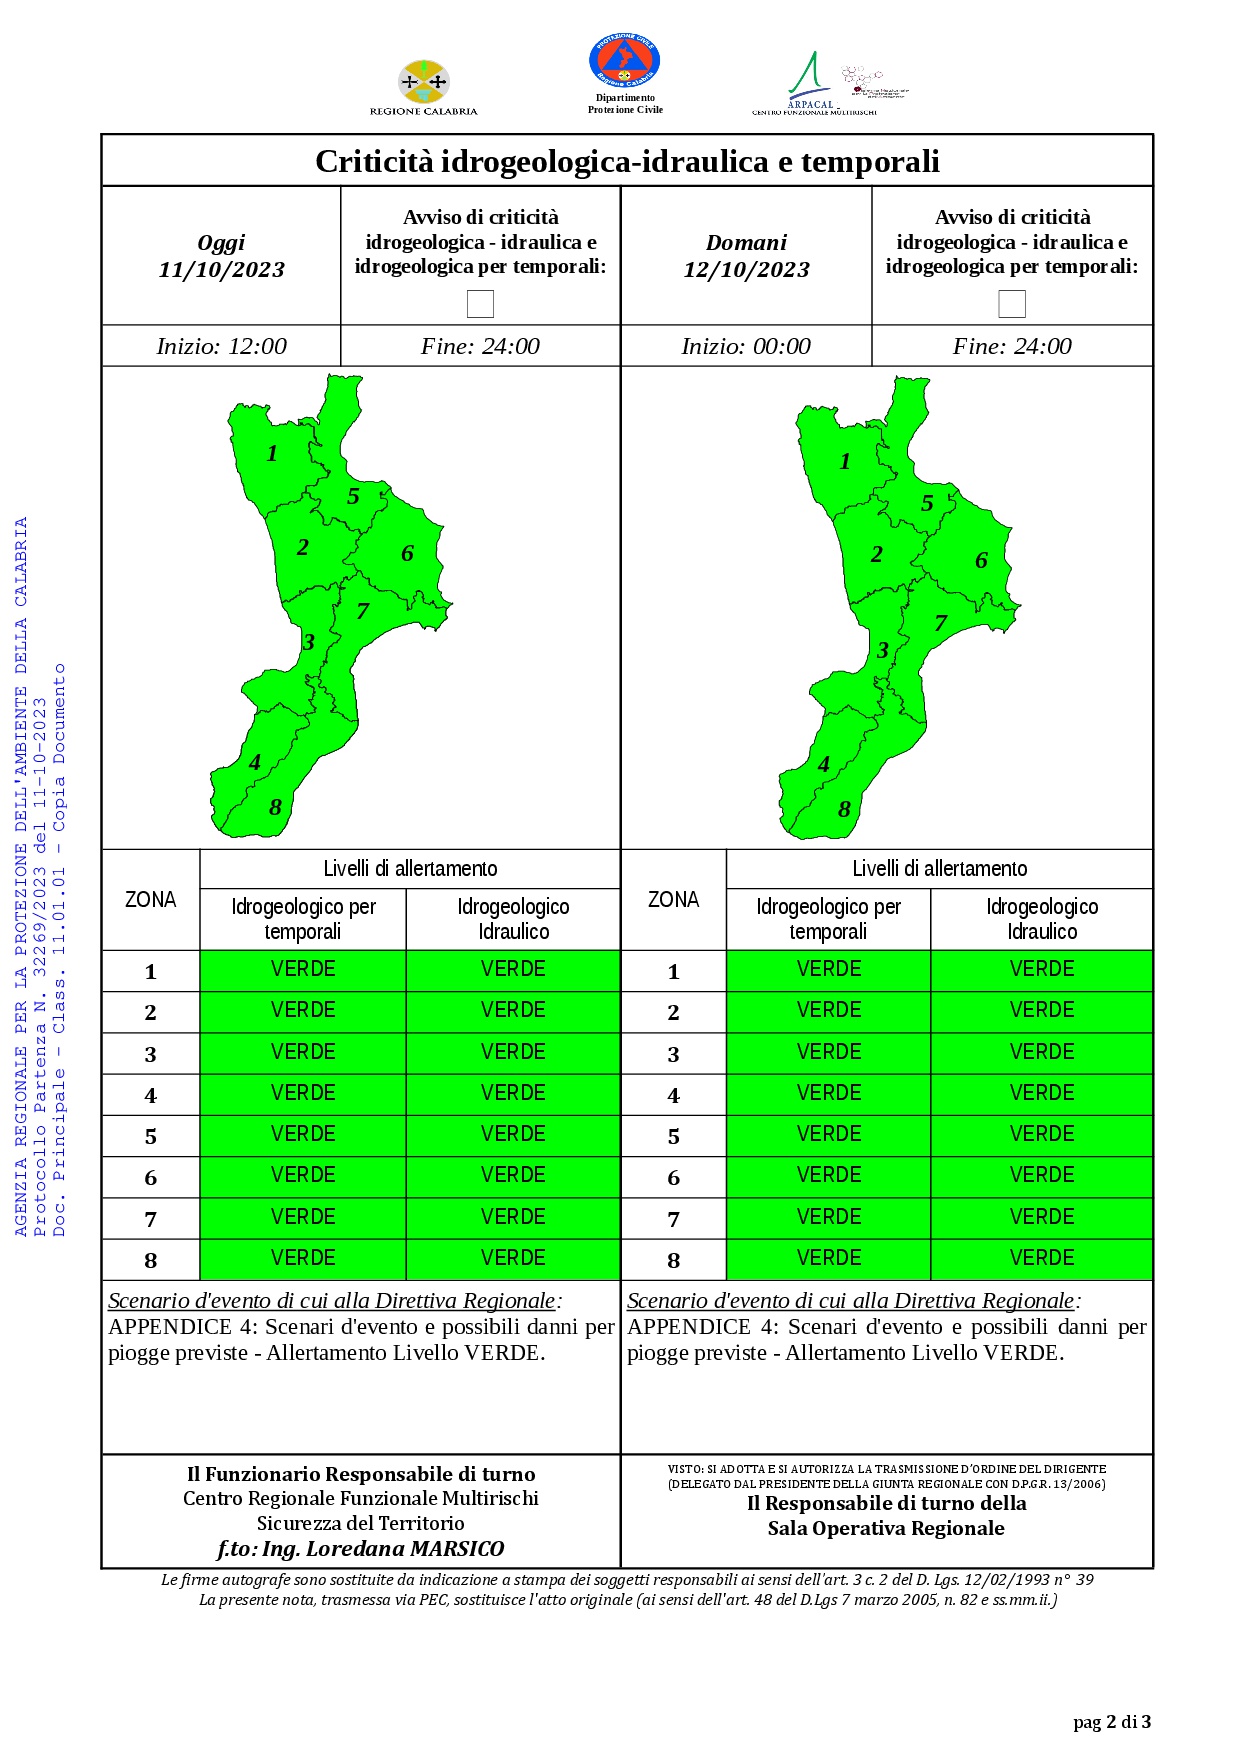 Criticità idrogeologica-idraulica e temporali in Calabria 11-10-2023